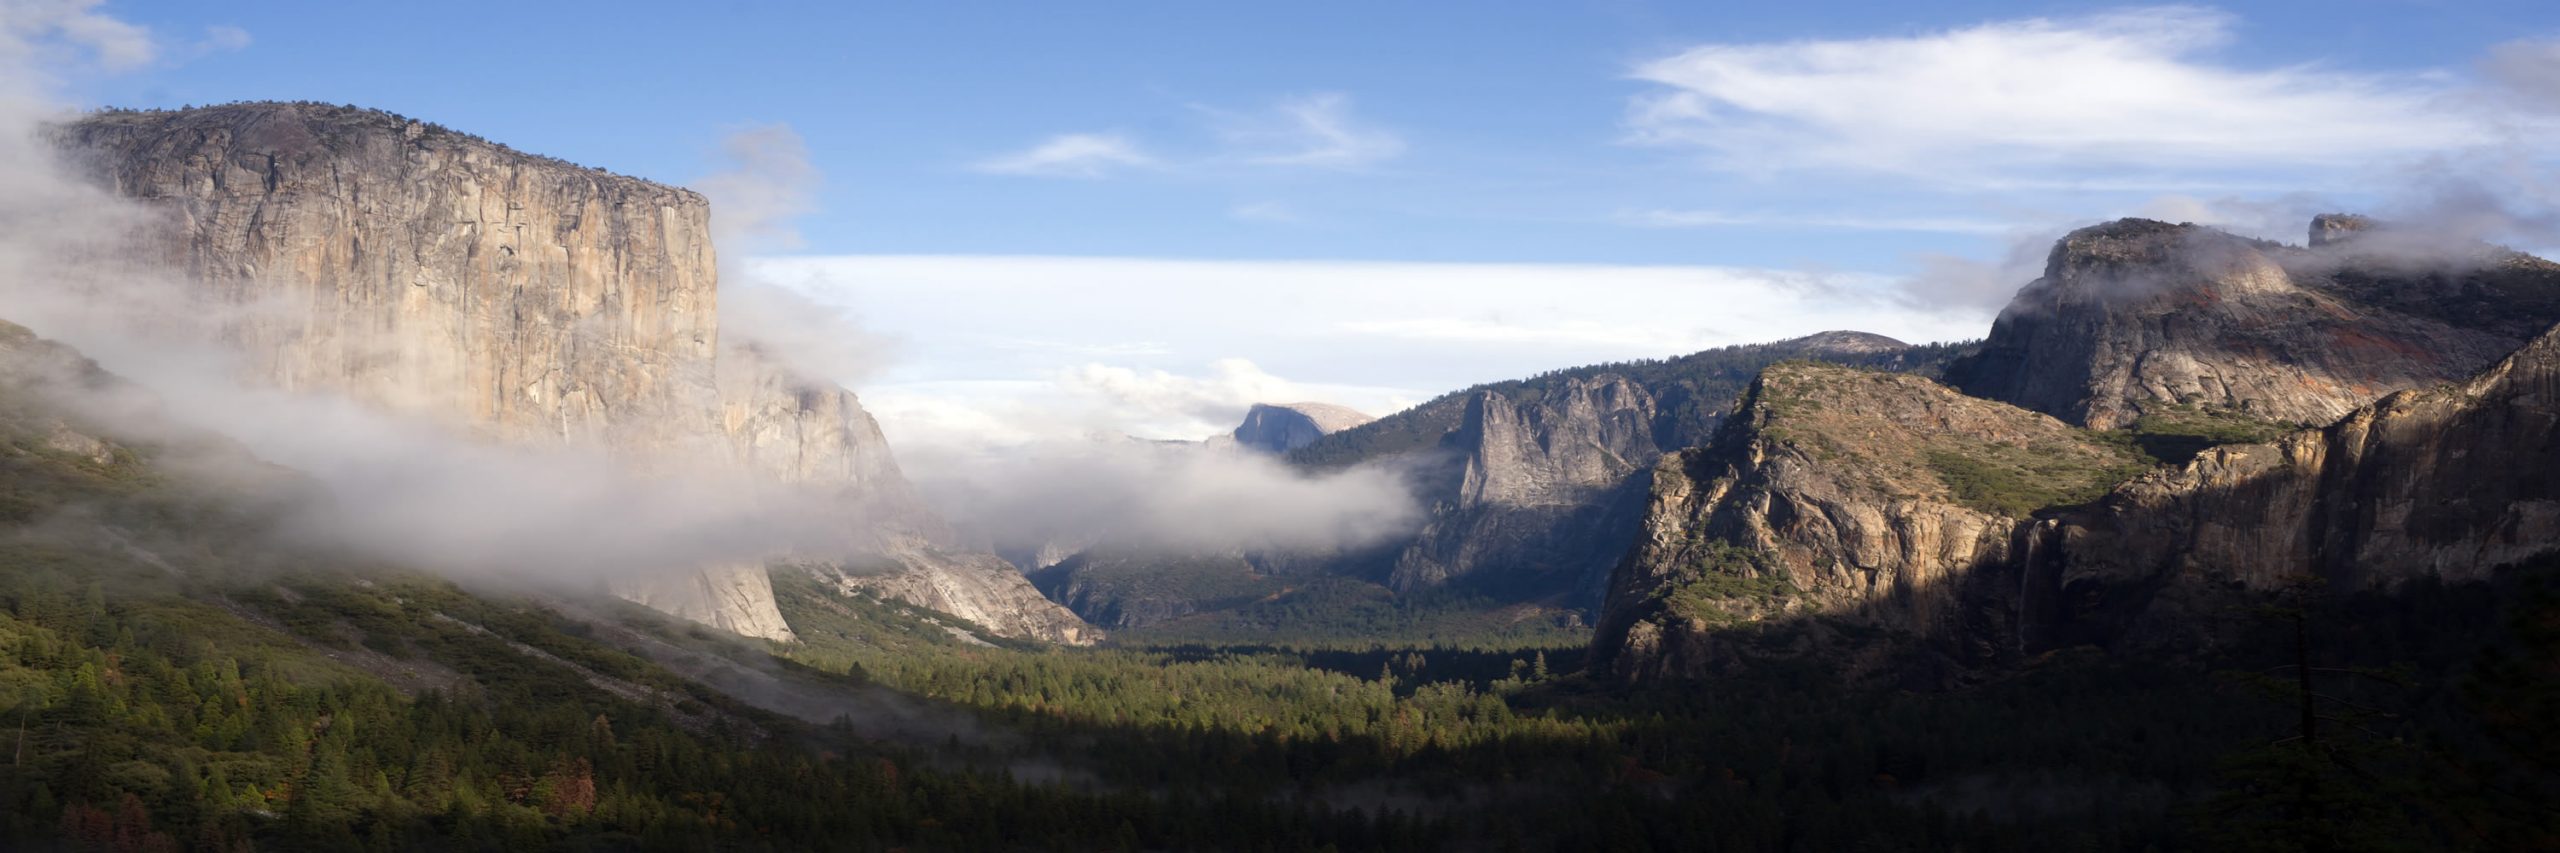 Stacy Ann Arras Missing Yosemite